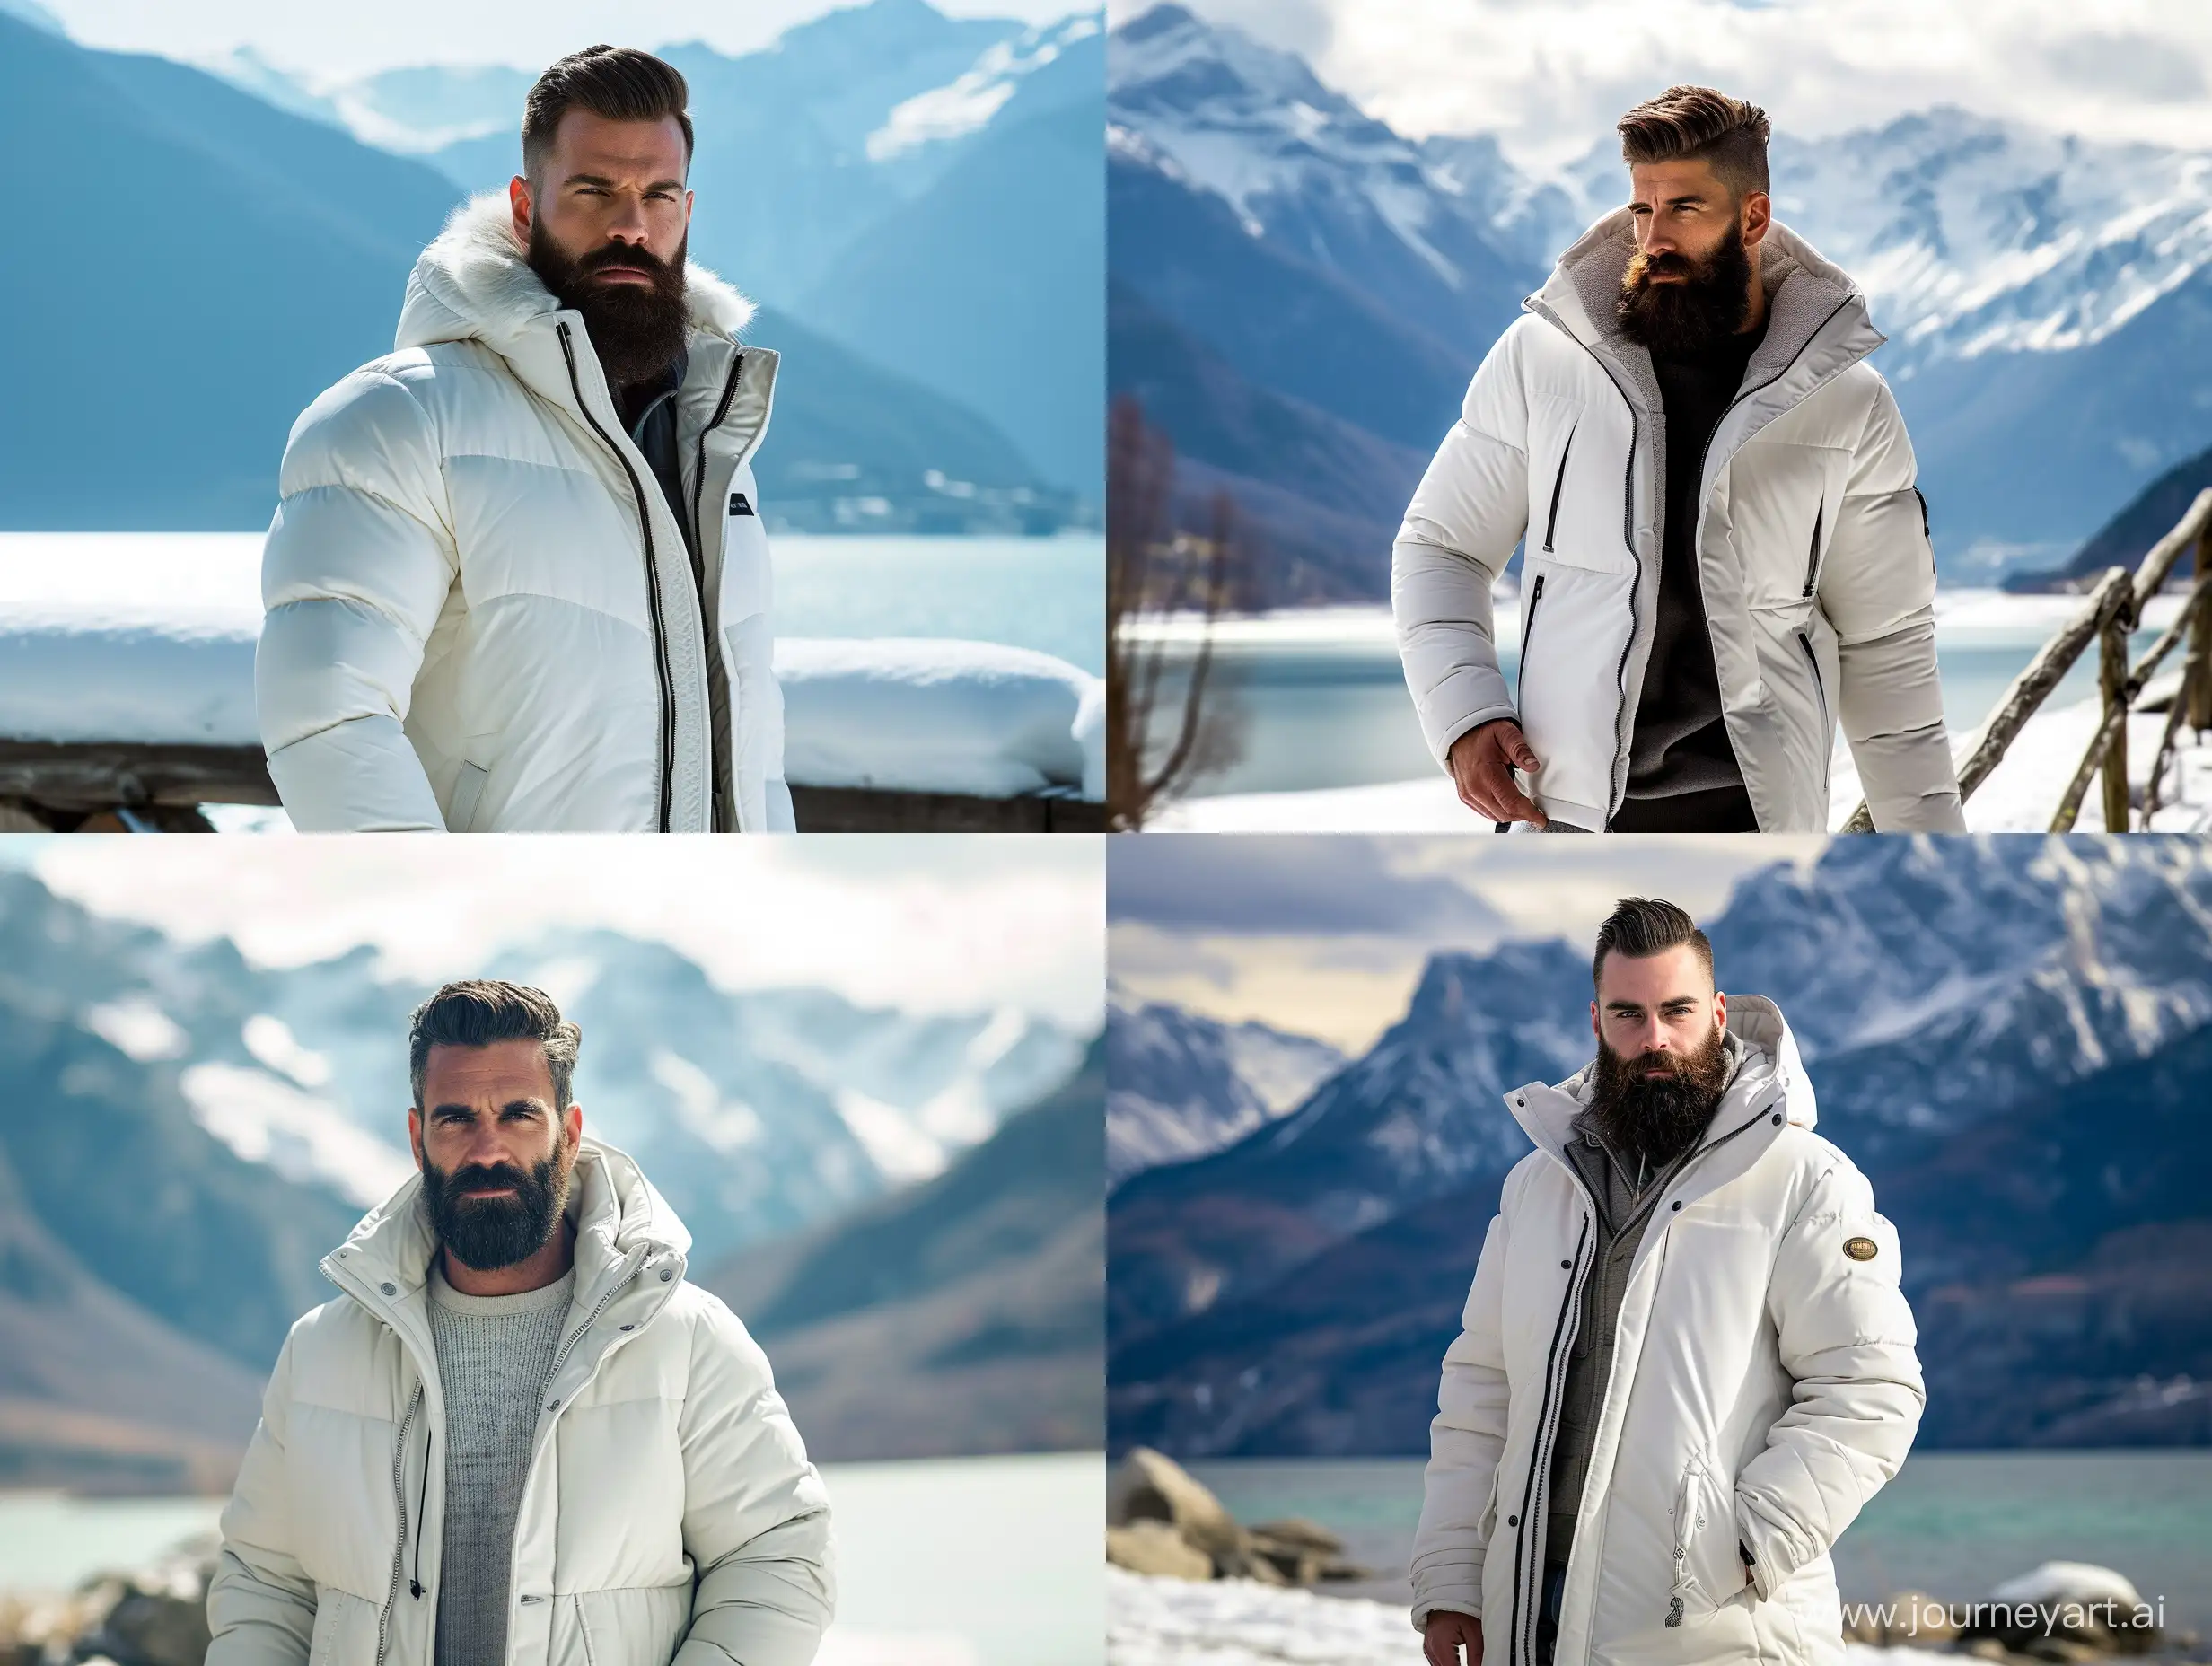 Stylish-Winter-Fashion-Bearded-Man-in-White-Jacket-Against-Mountain-Backdrop